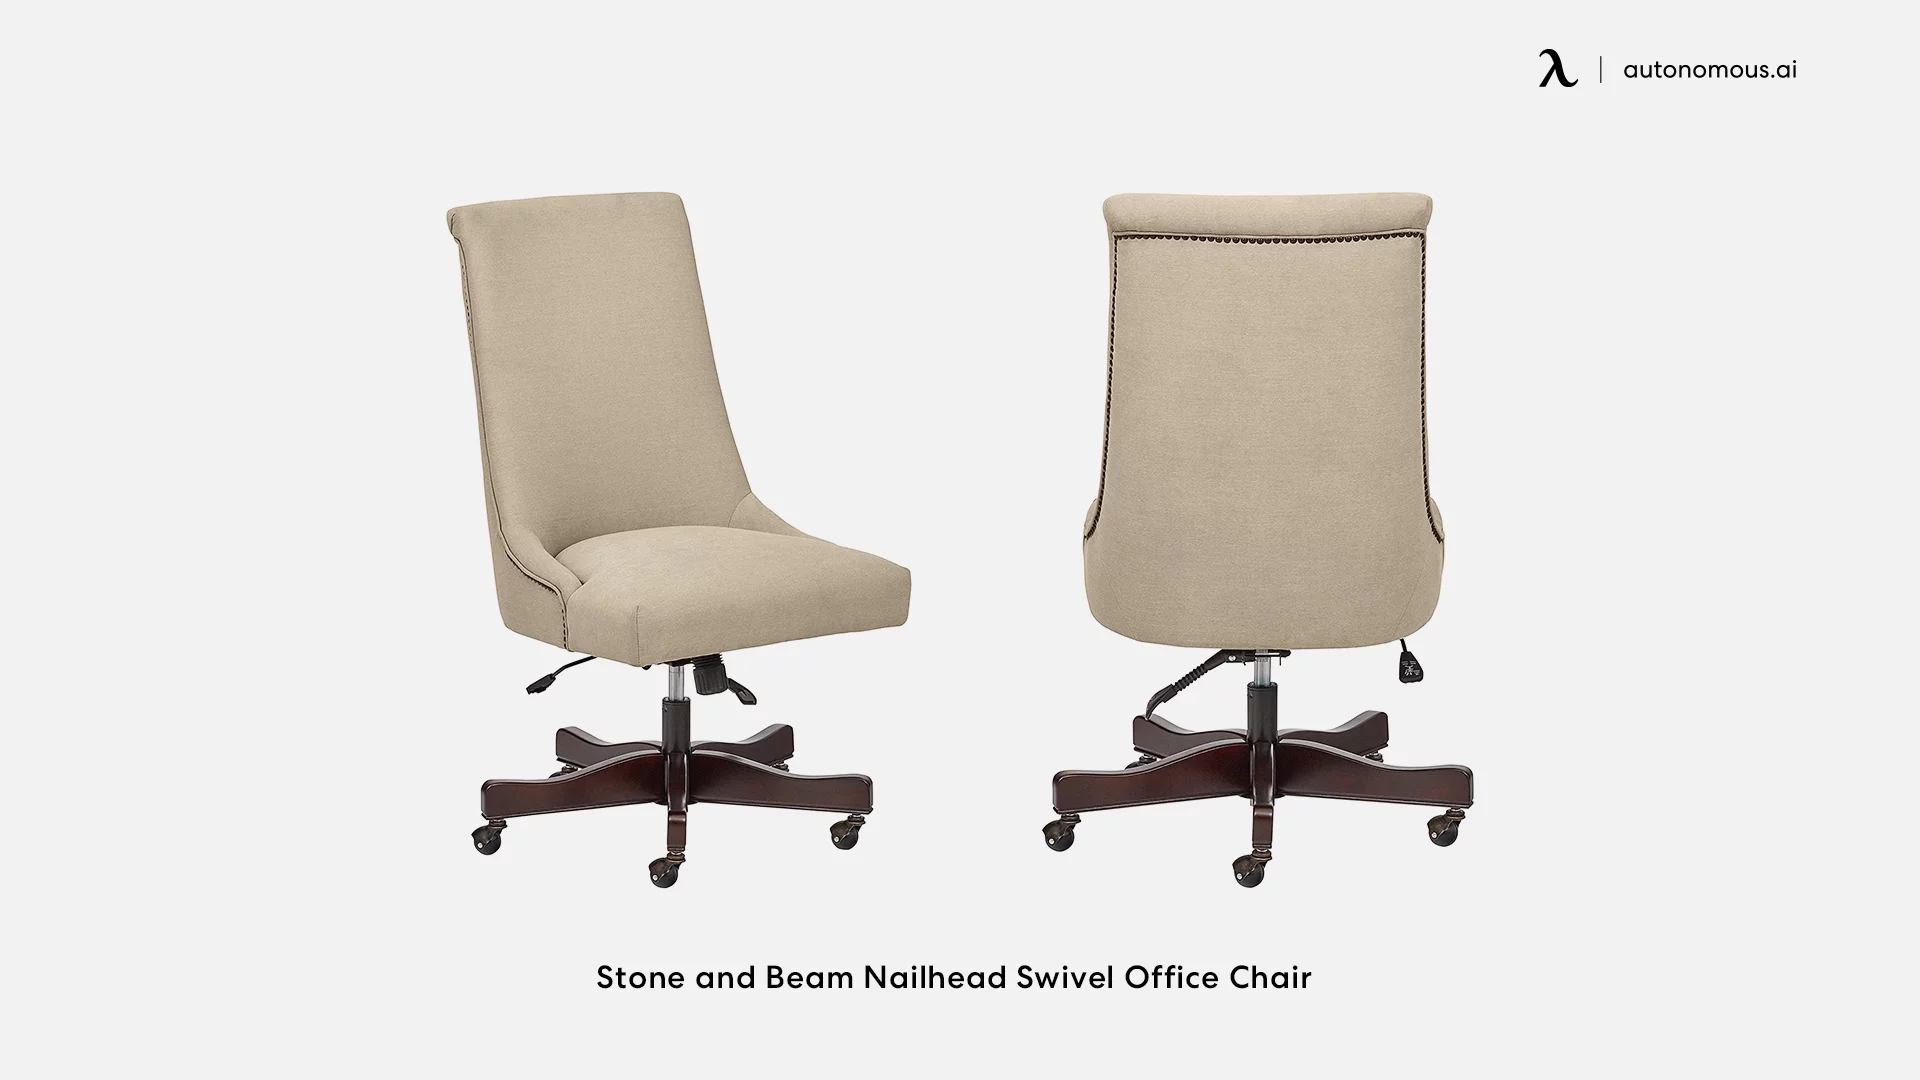 Stone and Beam Nailhead Swivel Office Chair